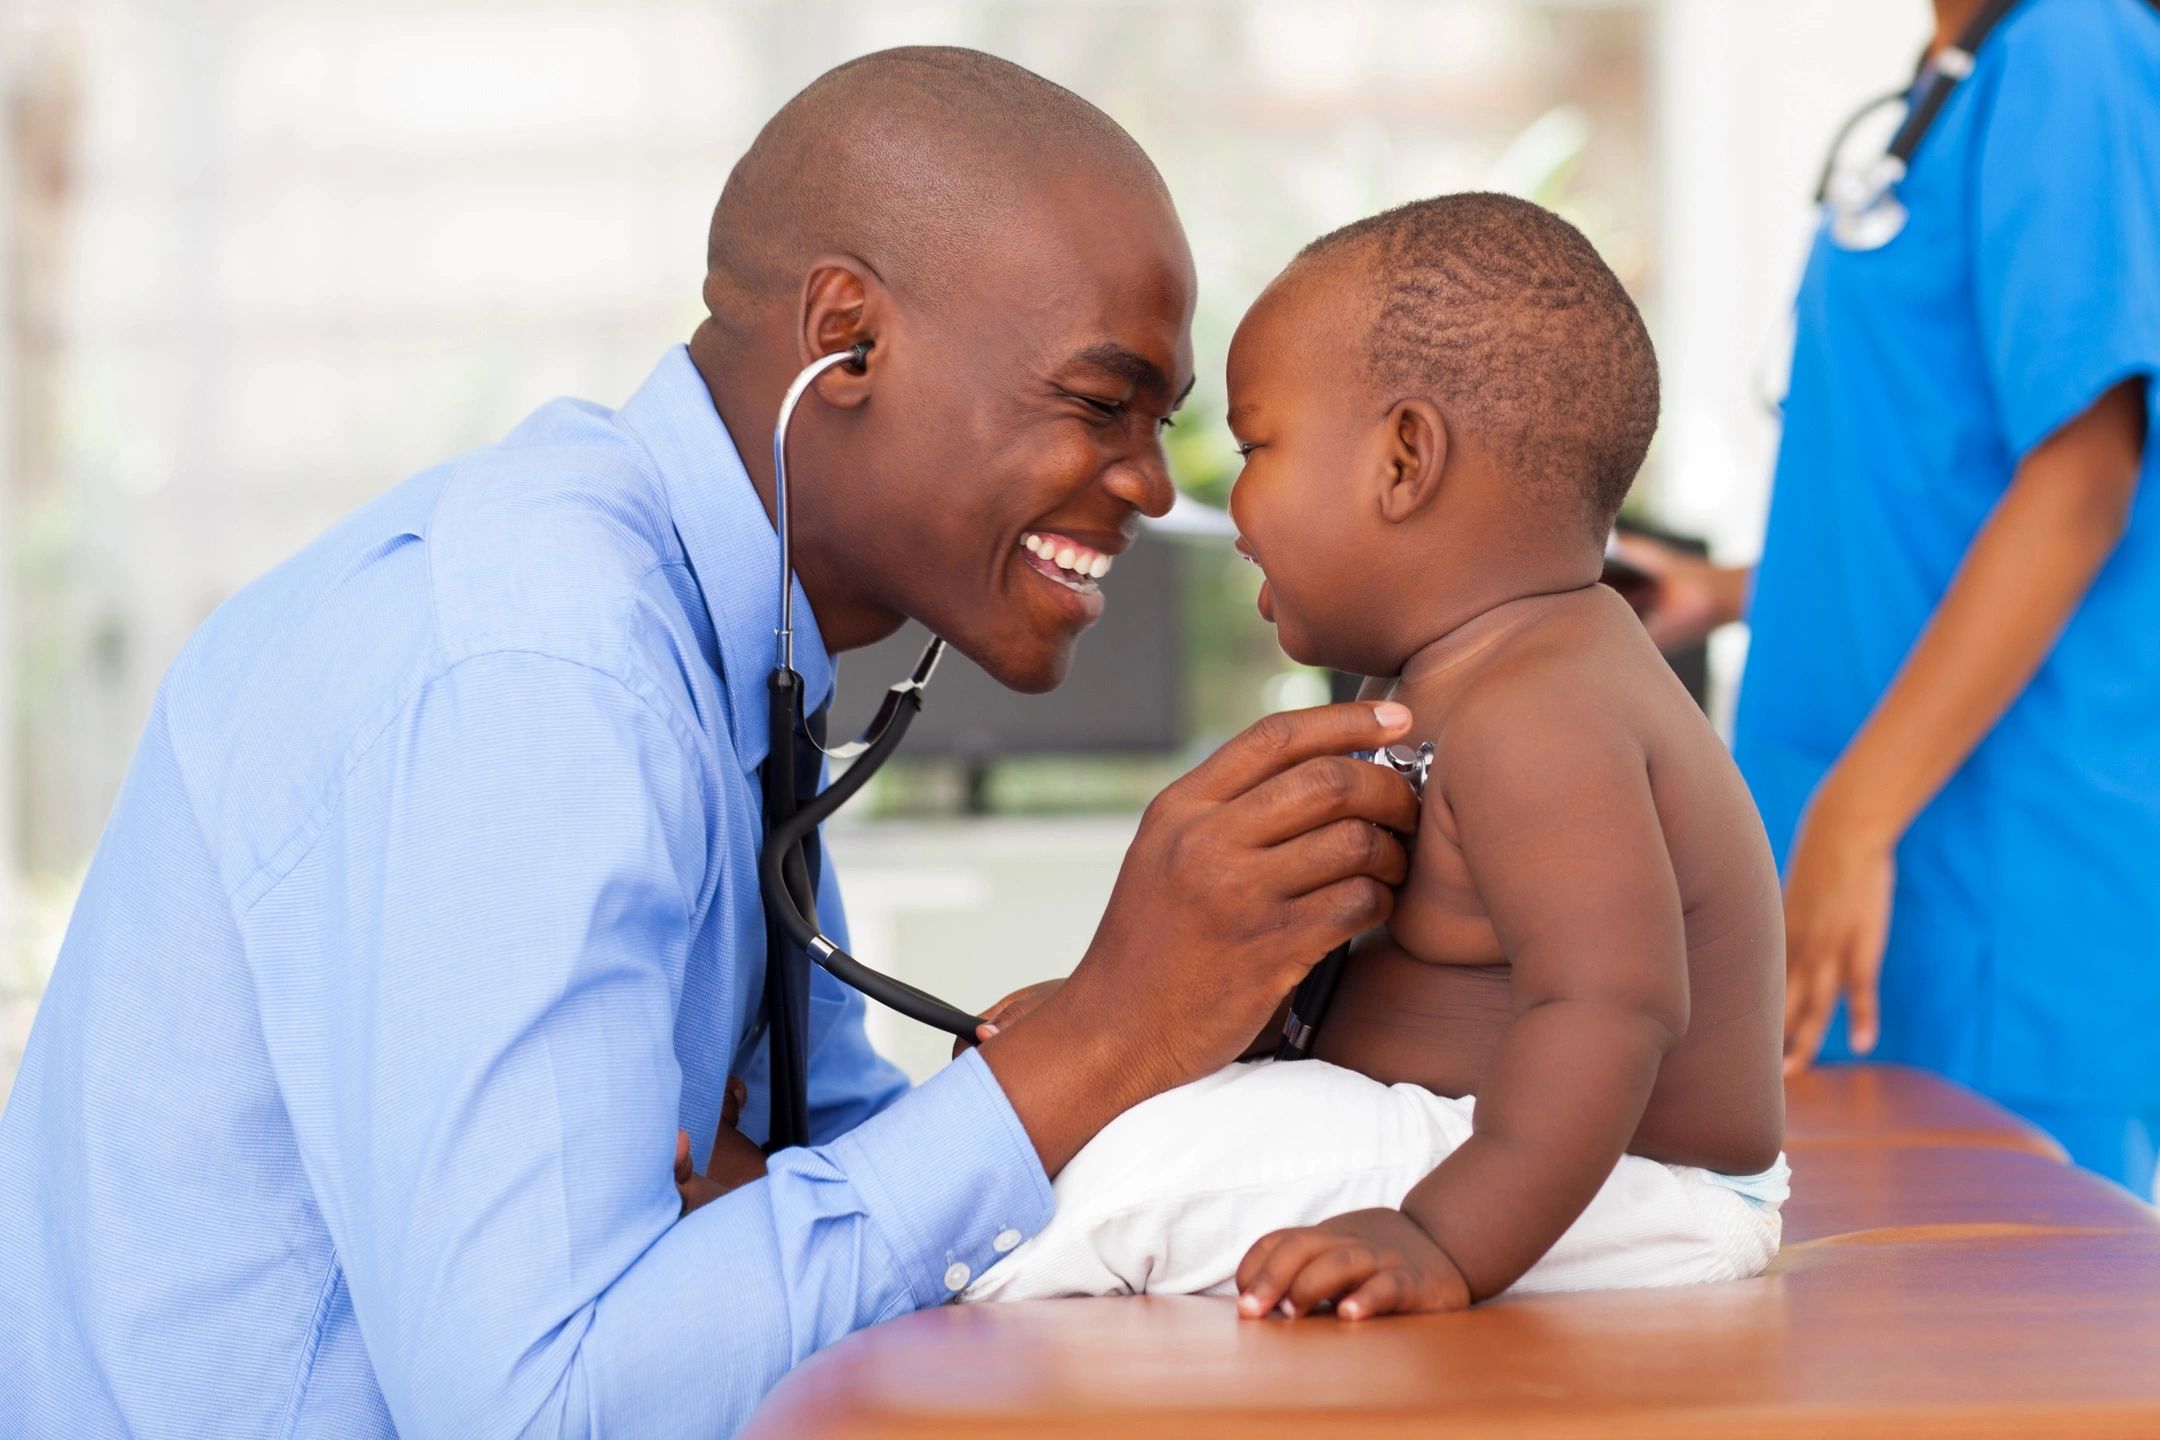 06/14/22 Health Advisory: Routine childhood immunization rates down